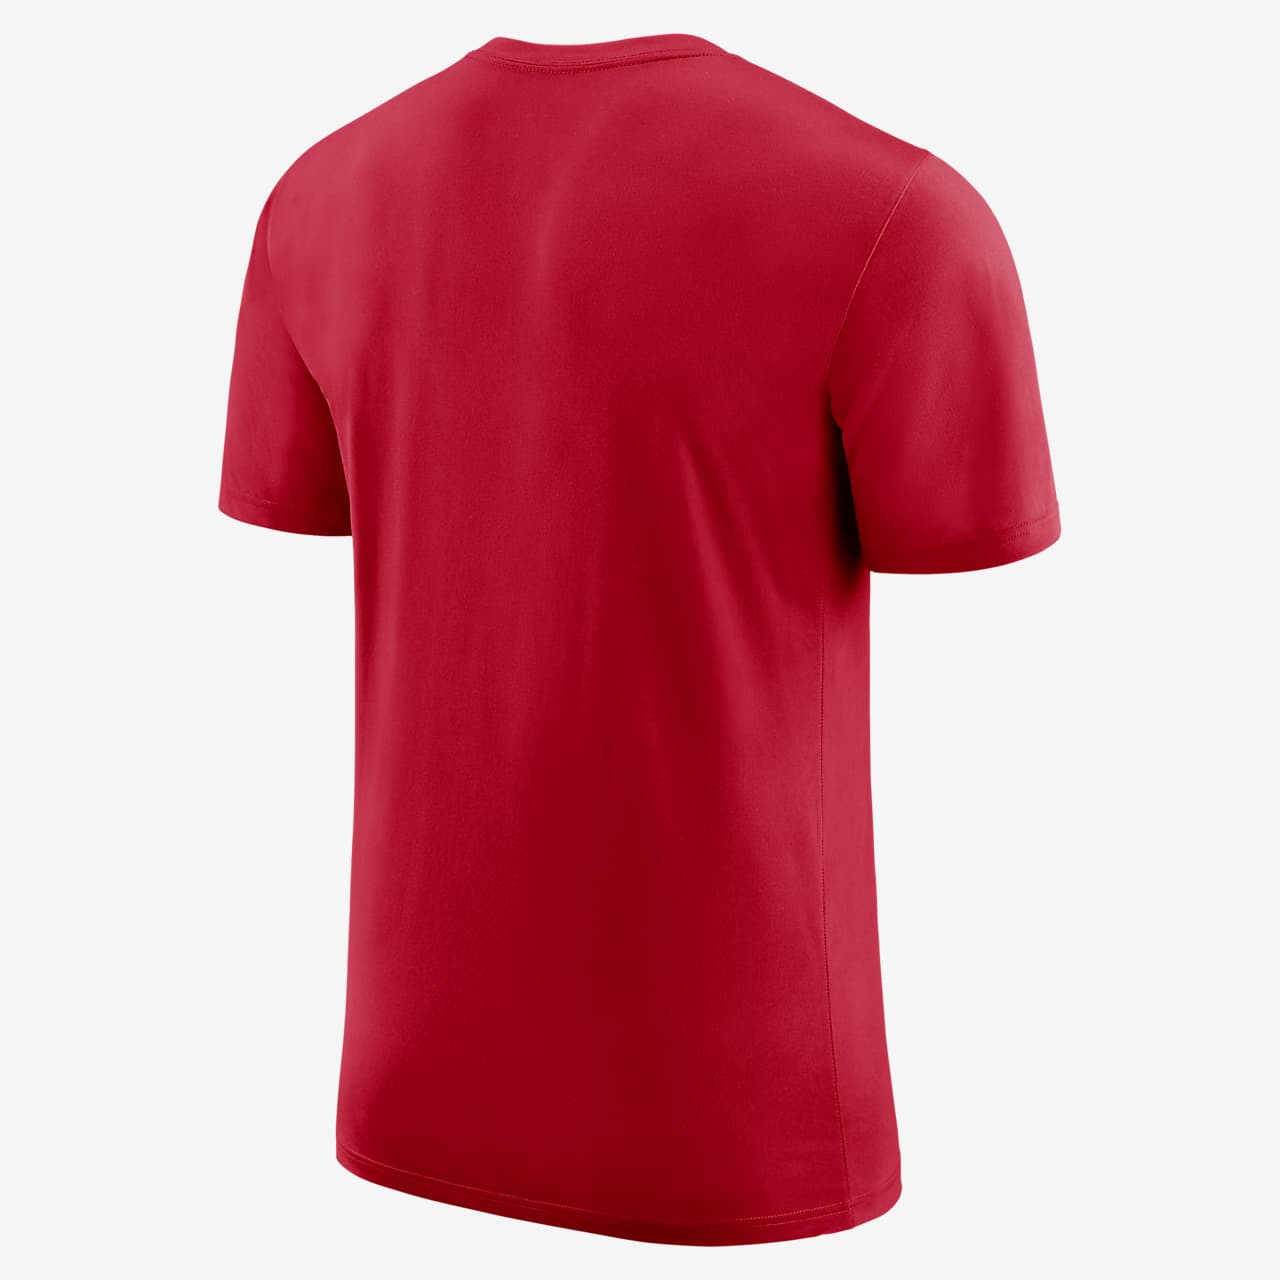 Buy Chicago Bulls Men's Nike Dri-Fit Nba Logo T-Shirt Online in Kuwait -  The Athletes Foot